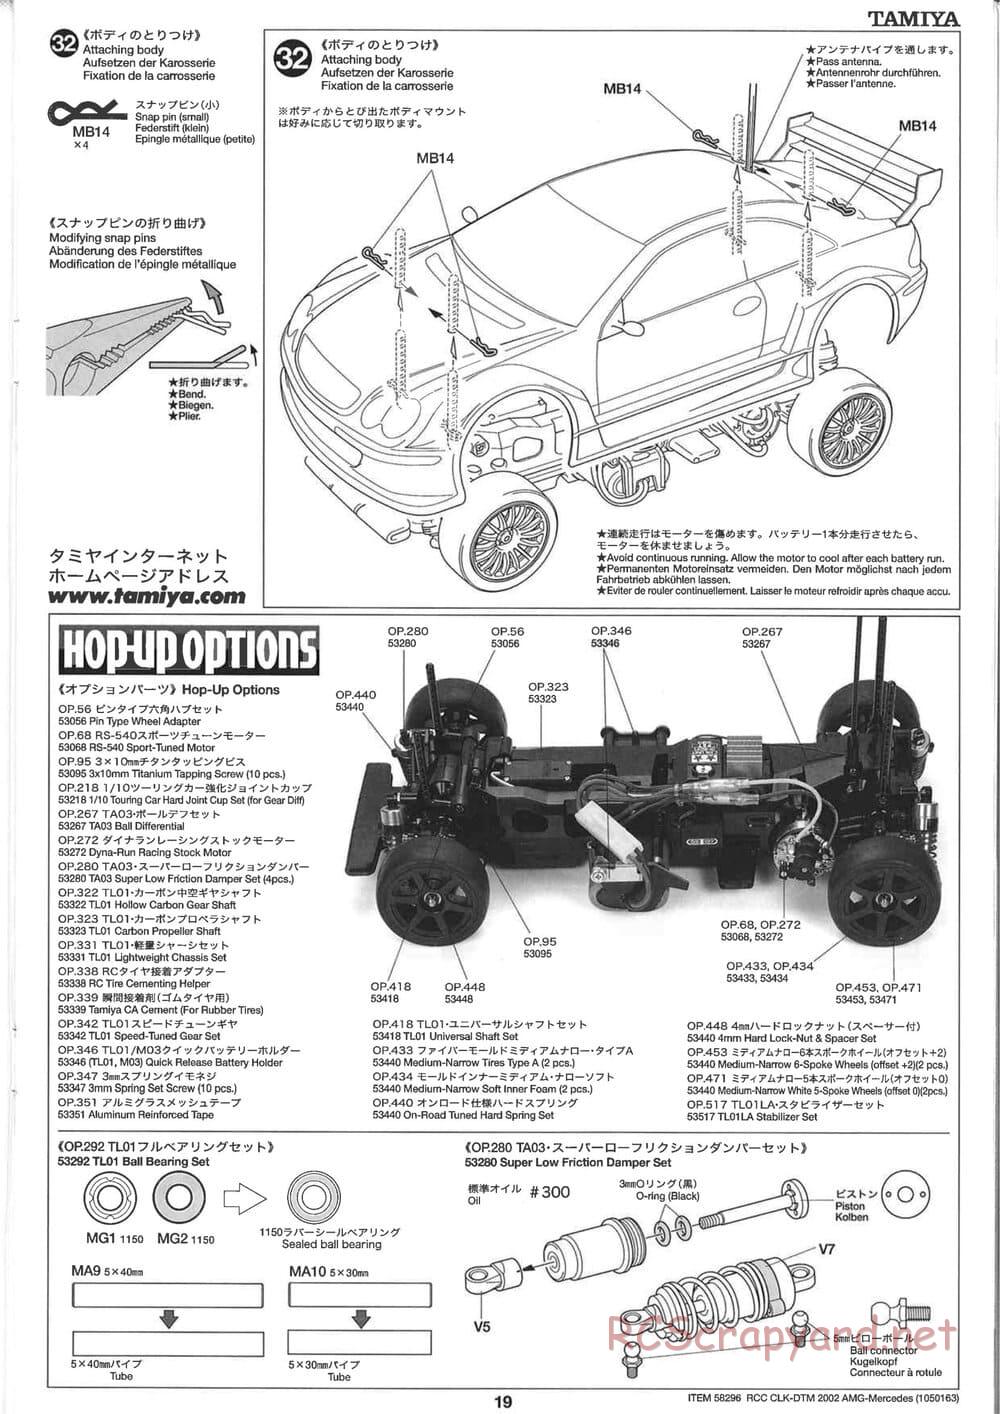 Tamiya - CLK DTM 2002 AMG Mercedes - TL-01 LA Chassis - Manual - Page 19